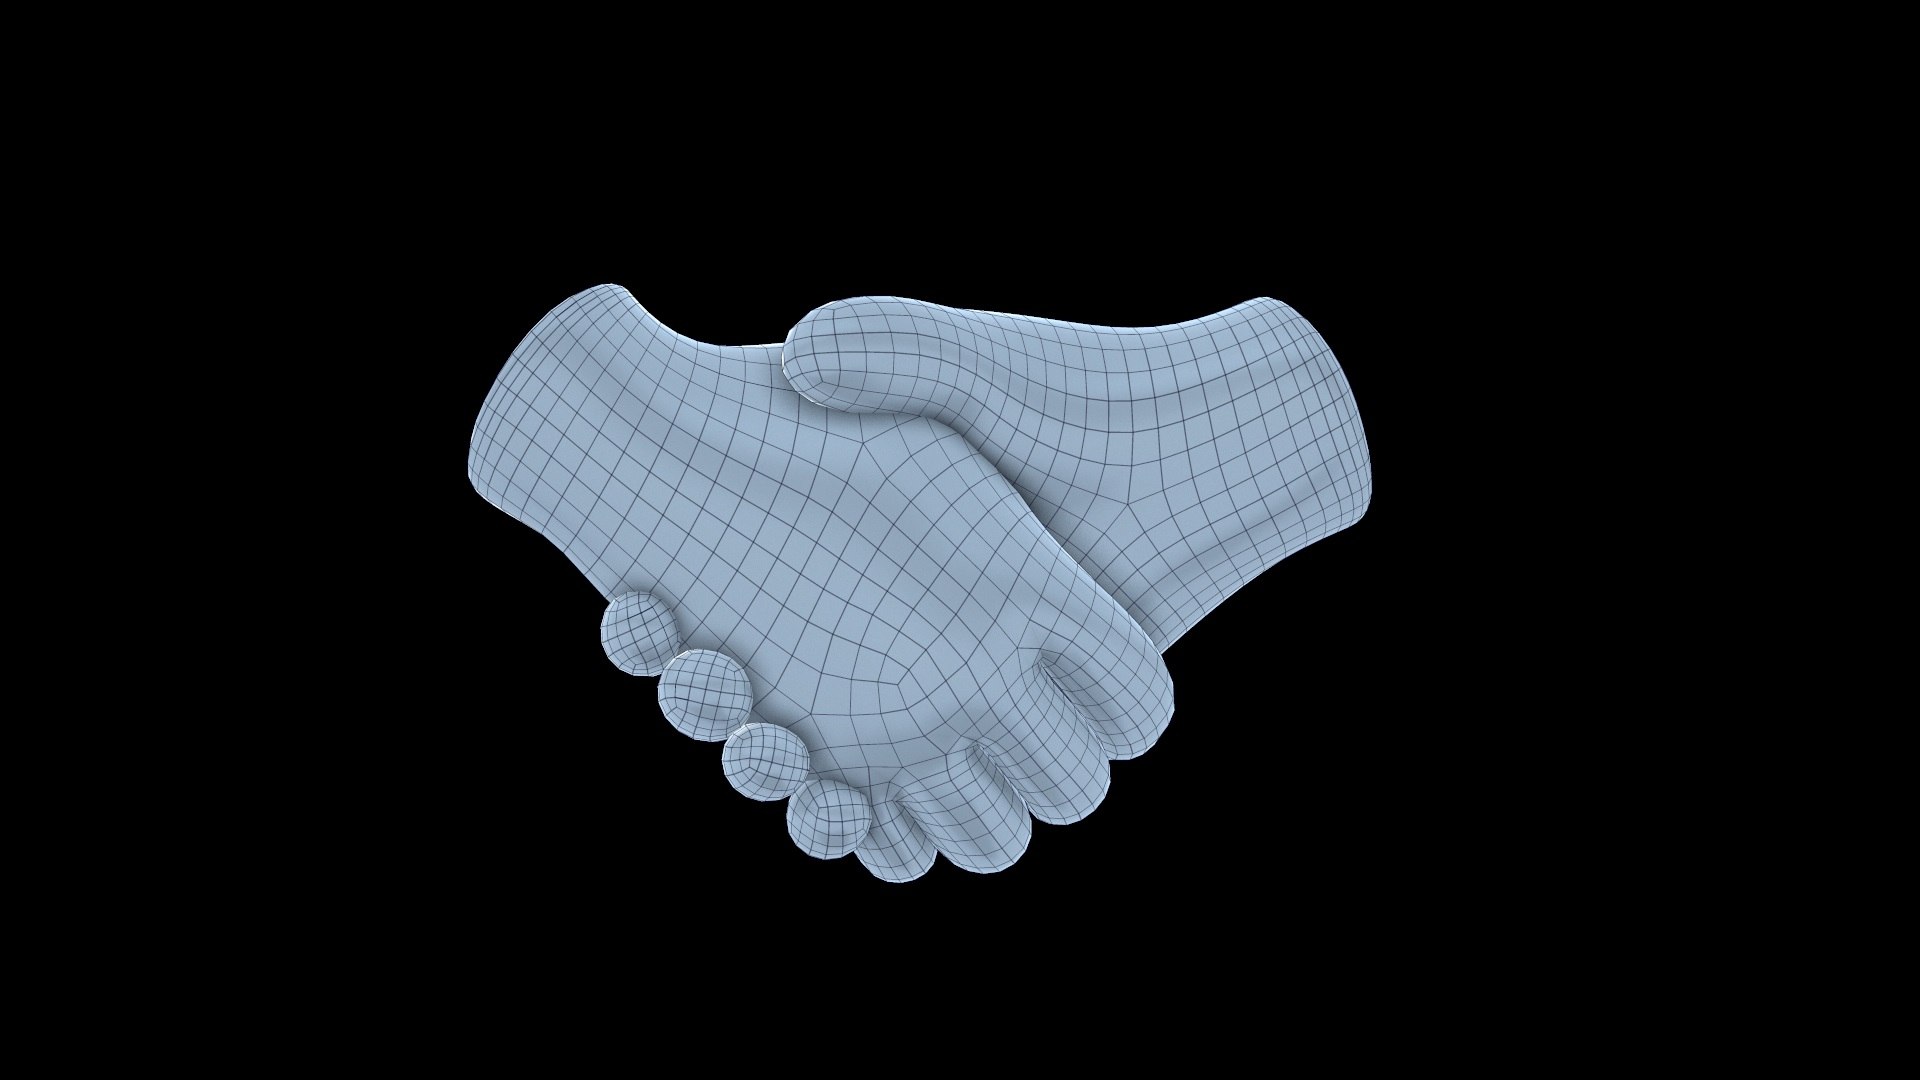 Handshake Gesture Emoji 3D Model $19 - .3ds .blend .c4d .fbx .max .ma .lxo  .obj .usdz .unitypackage .upk .gltf - Free3D